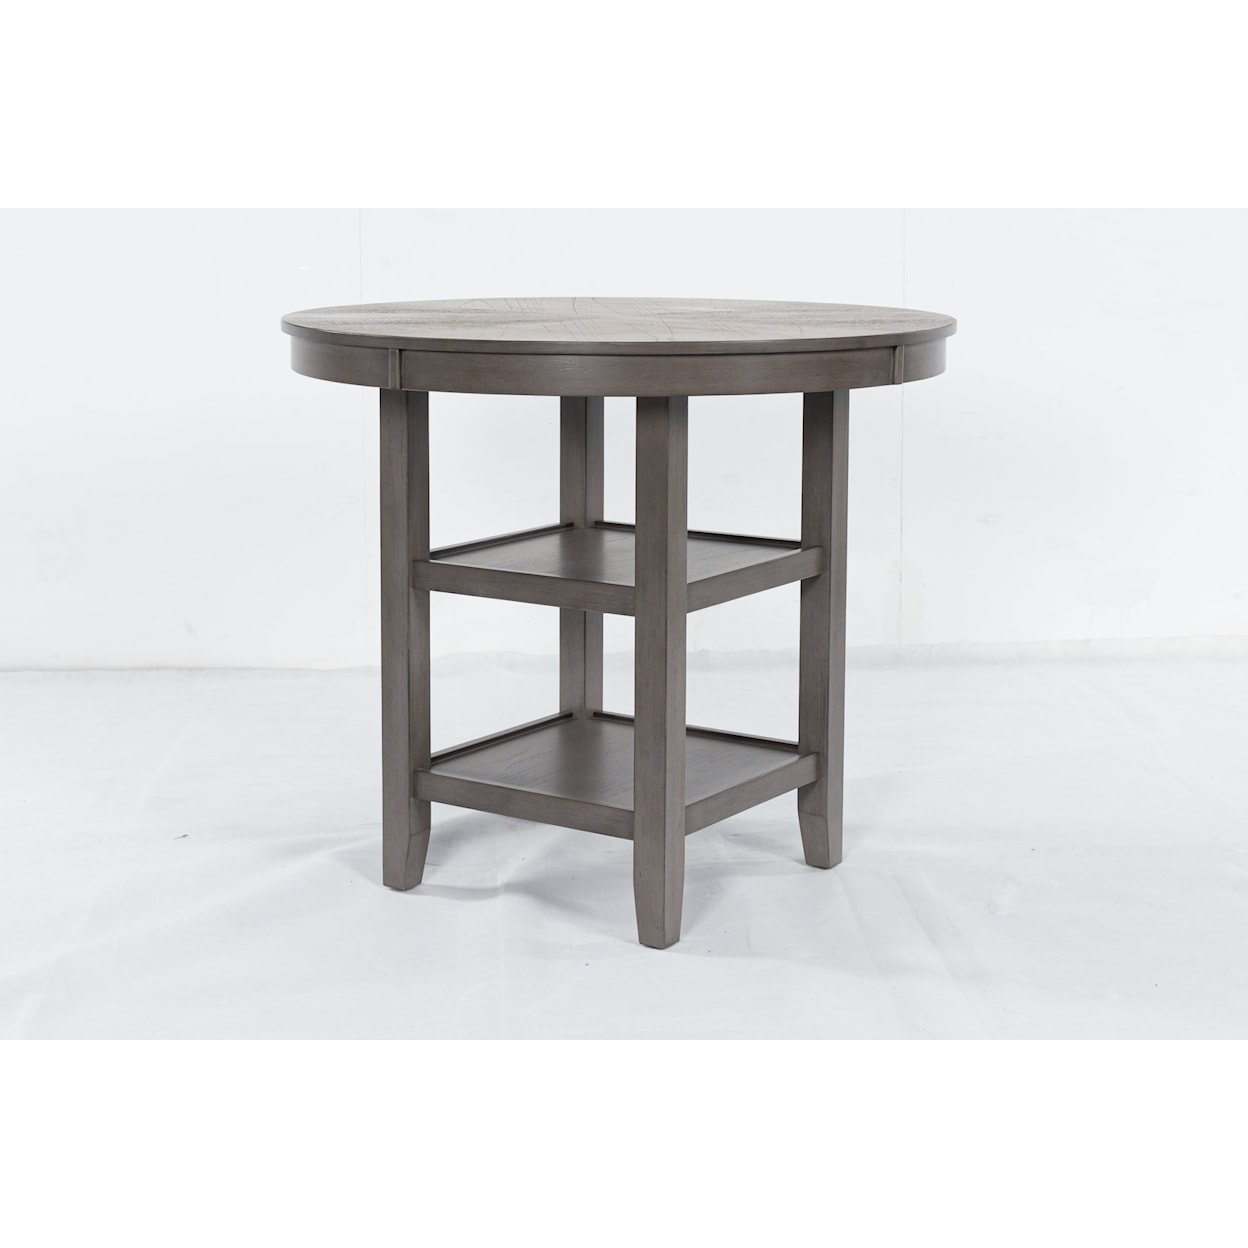 Ashley Furniture Signature Design Wrenning Counter Dining Table & 4 Stools (Set of 5)